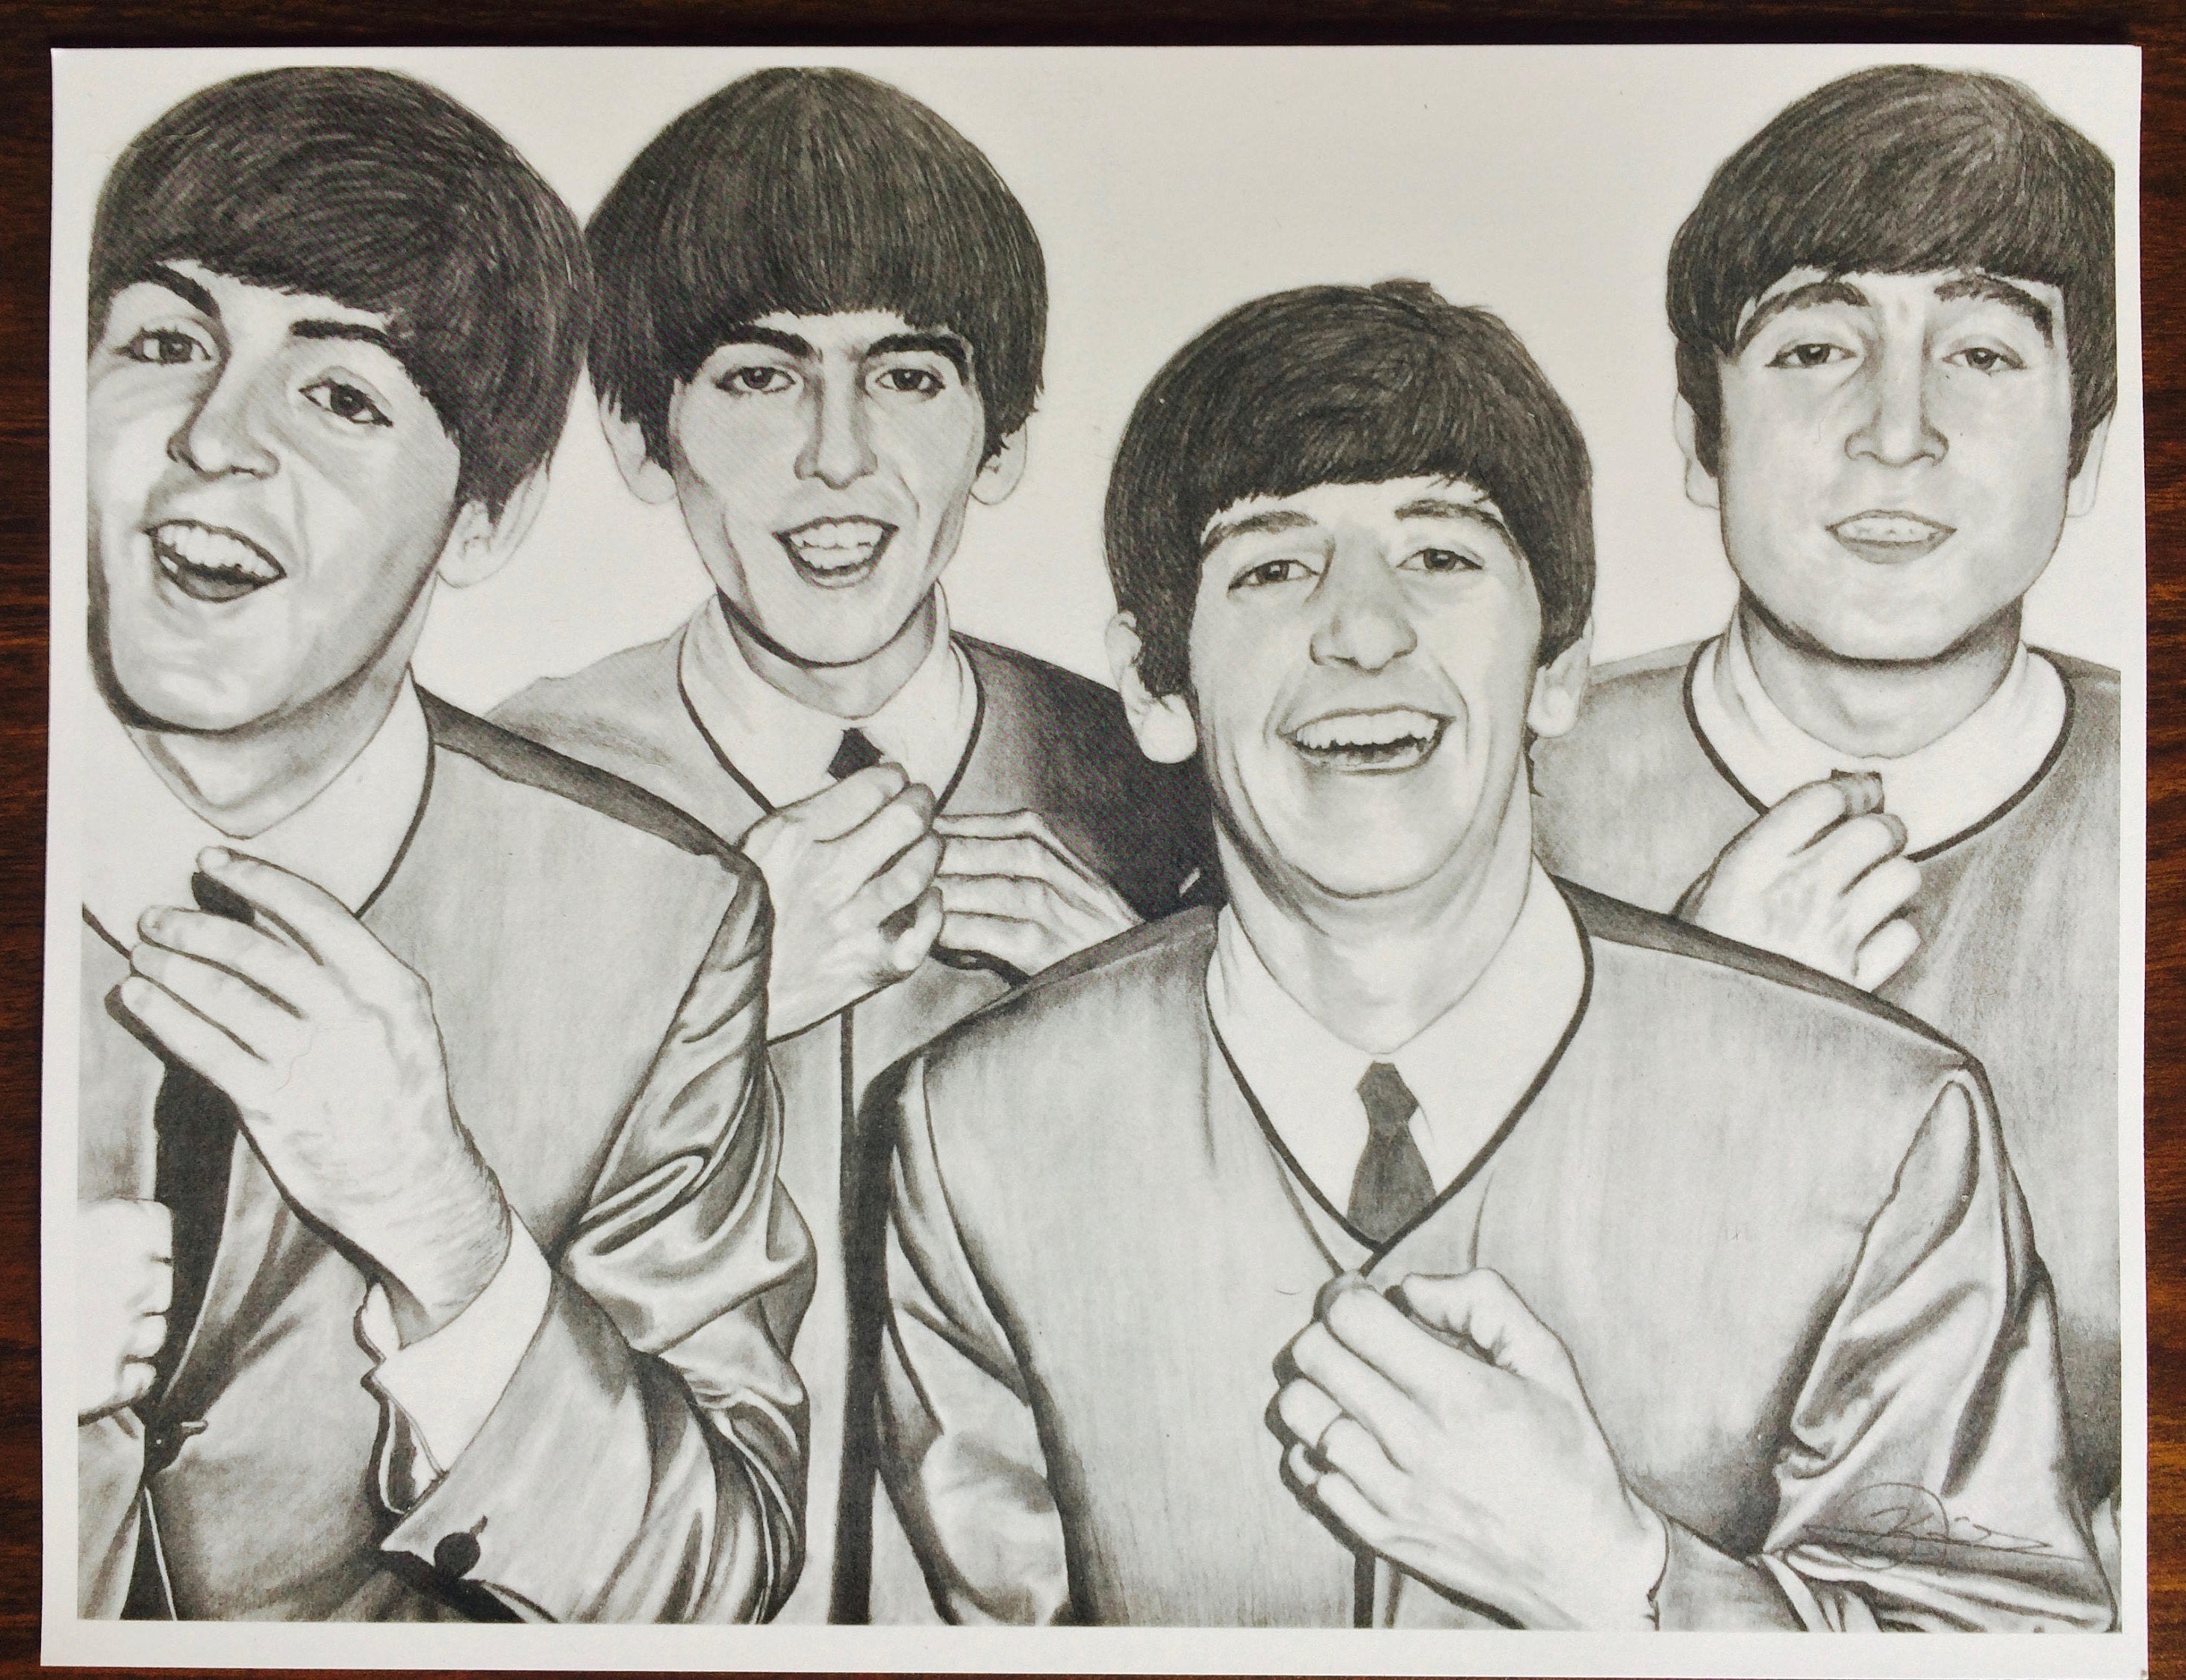 11x14 Original Graphite Drawing of The Beatles